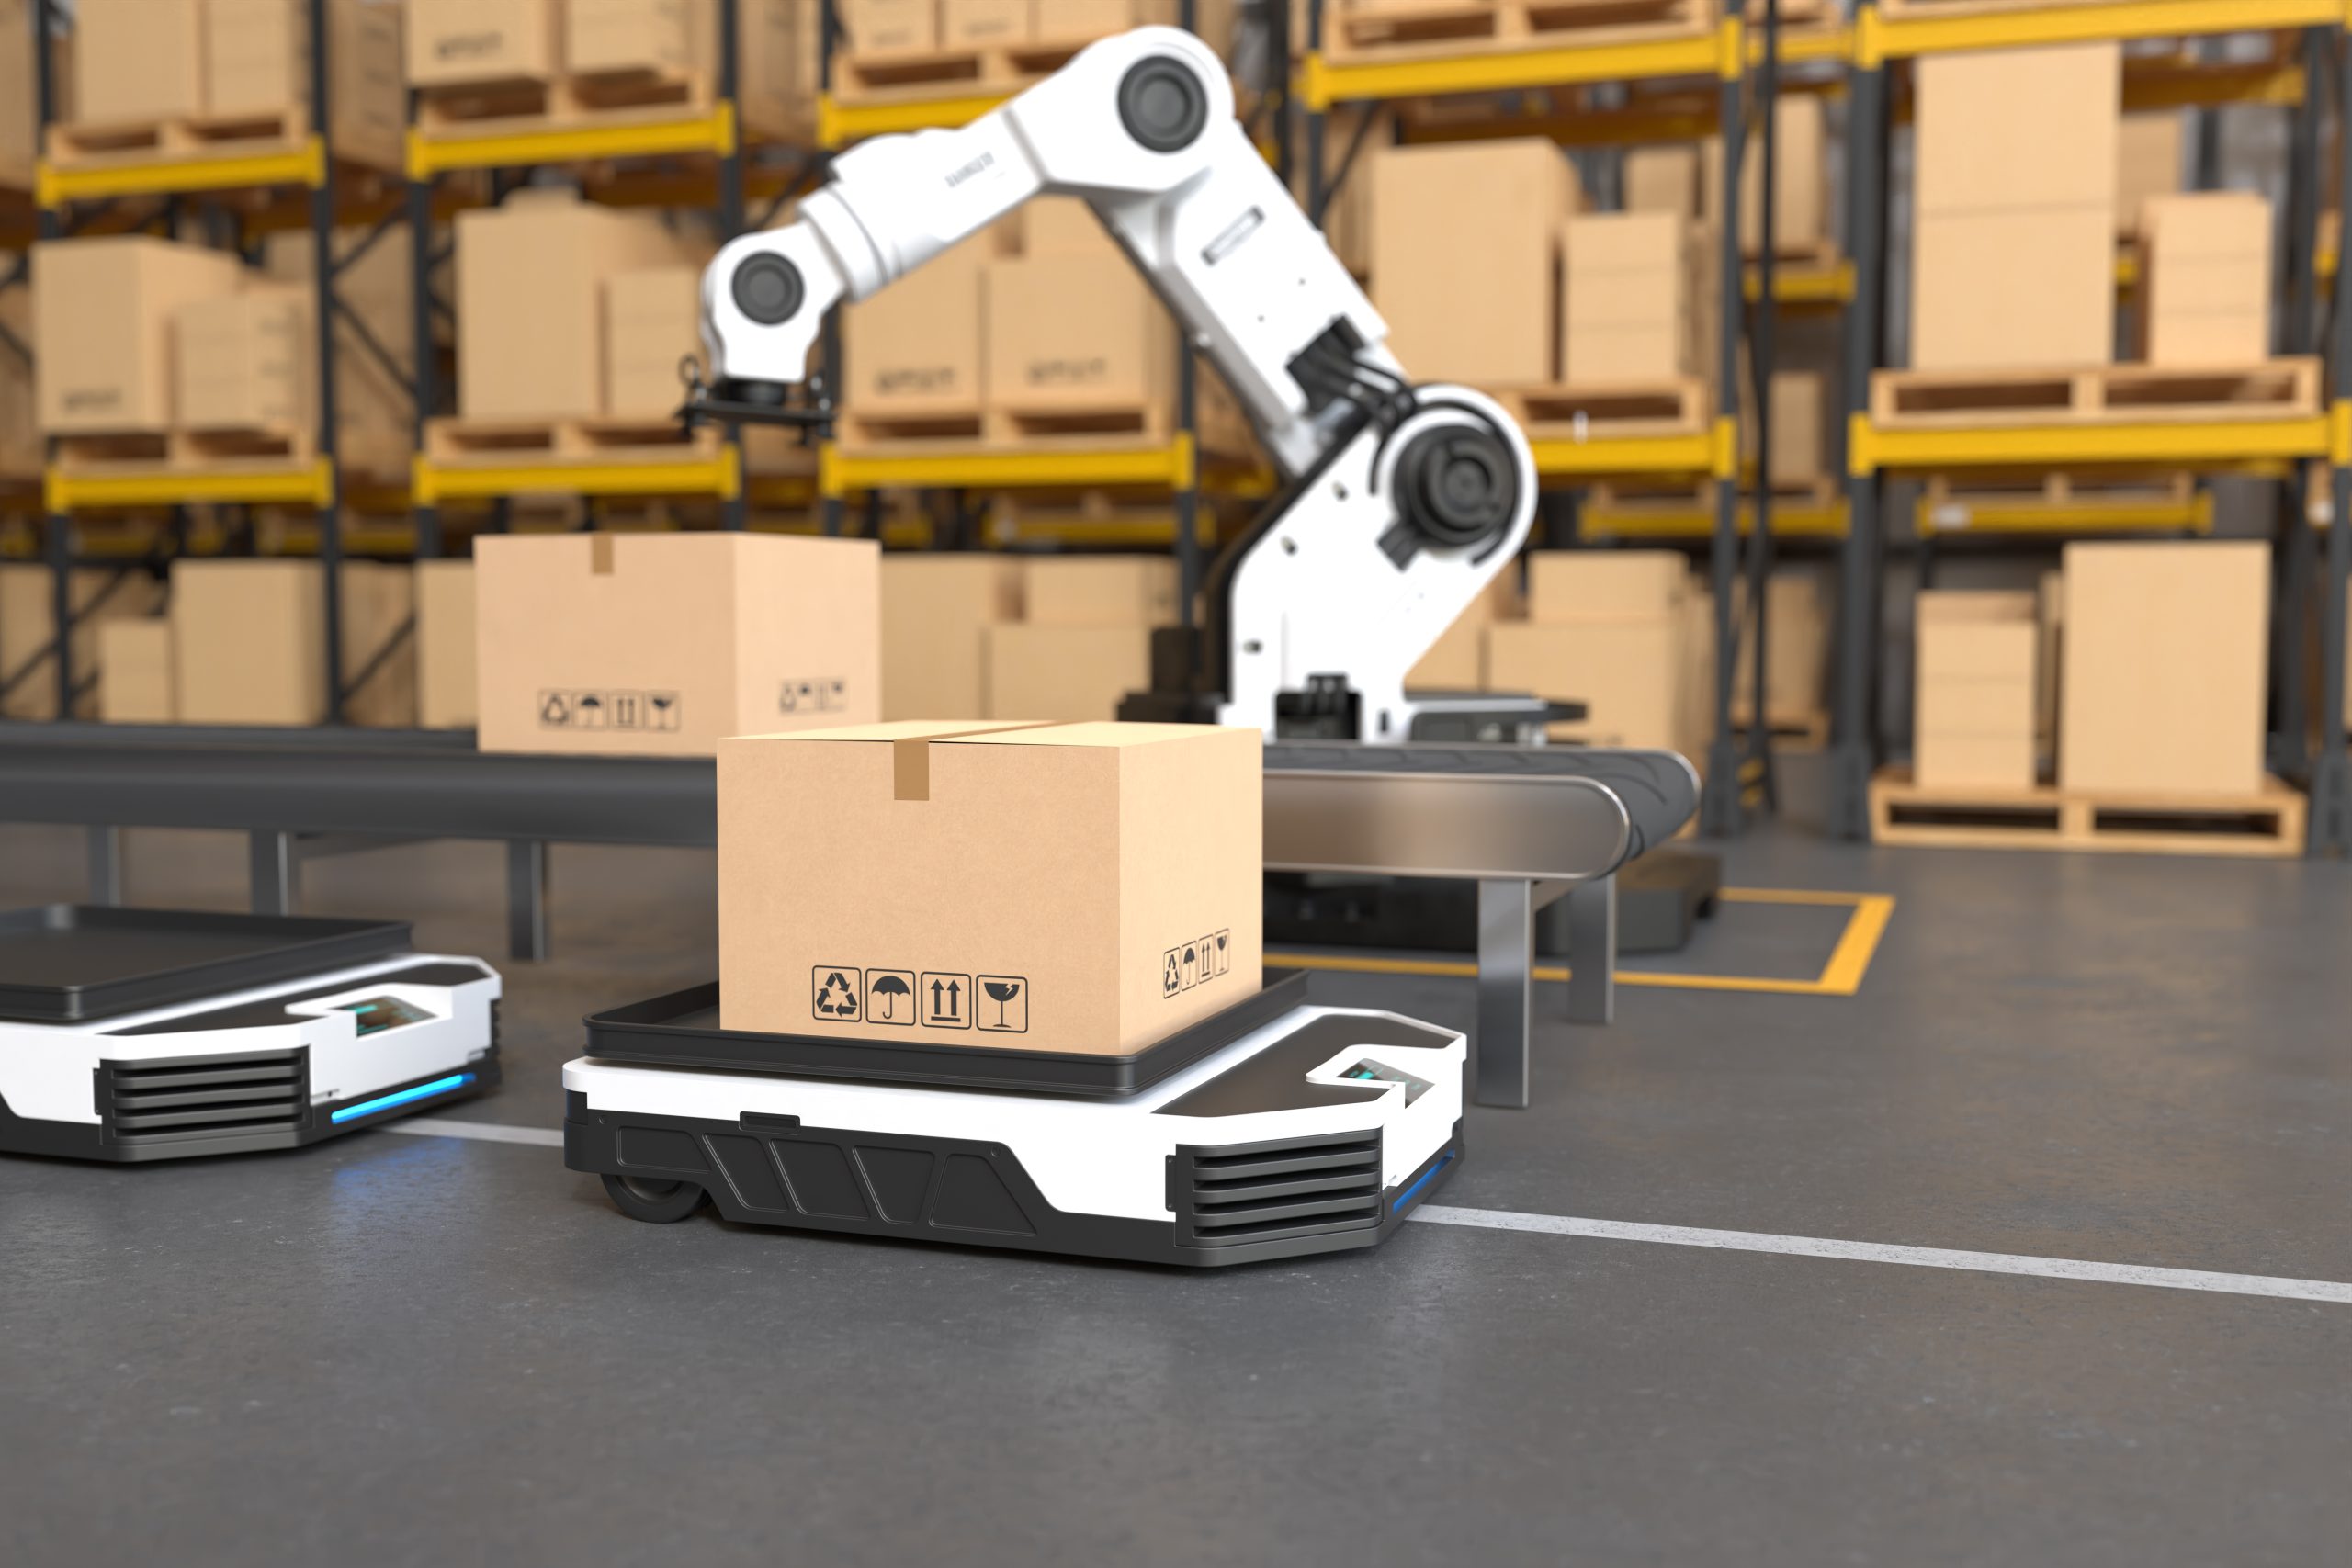 The Robot arm picks up the box to Autonomous Robot transportation in warehouses.